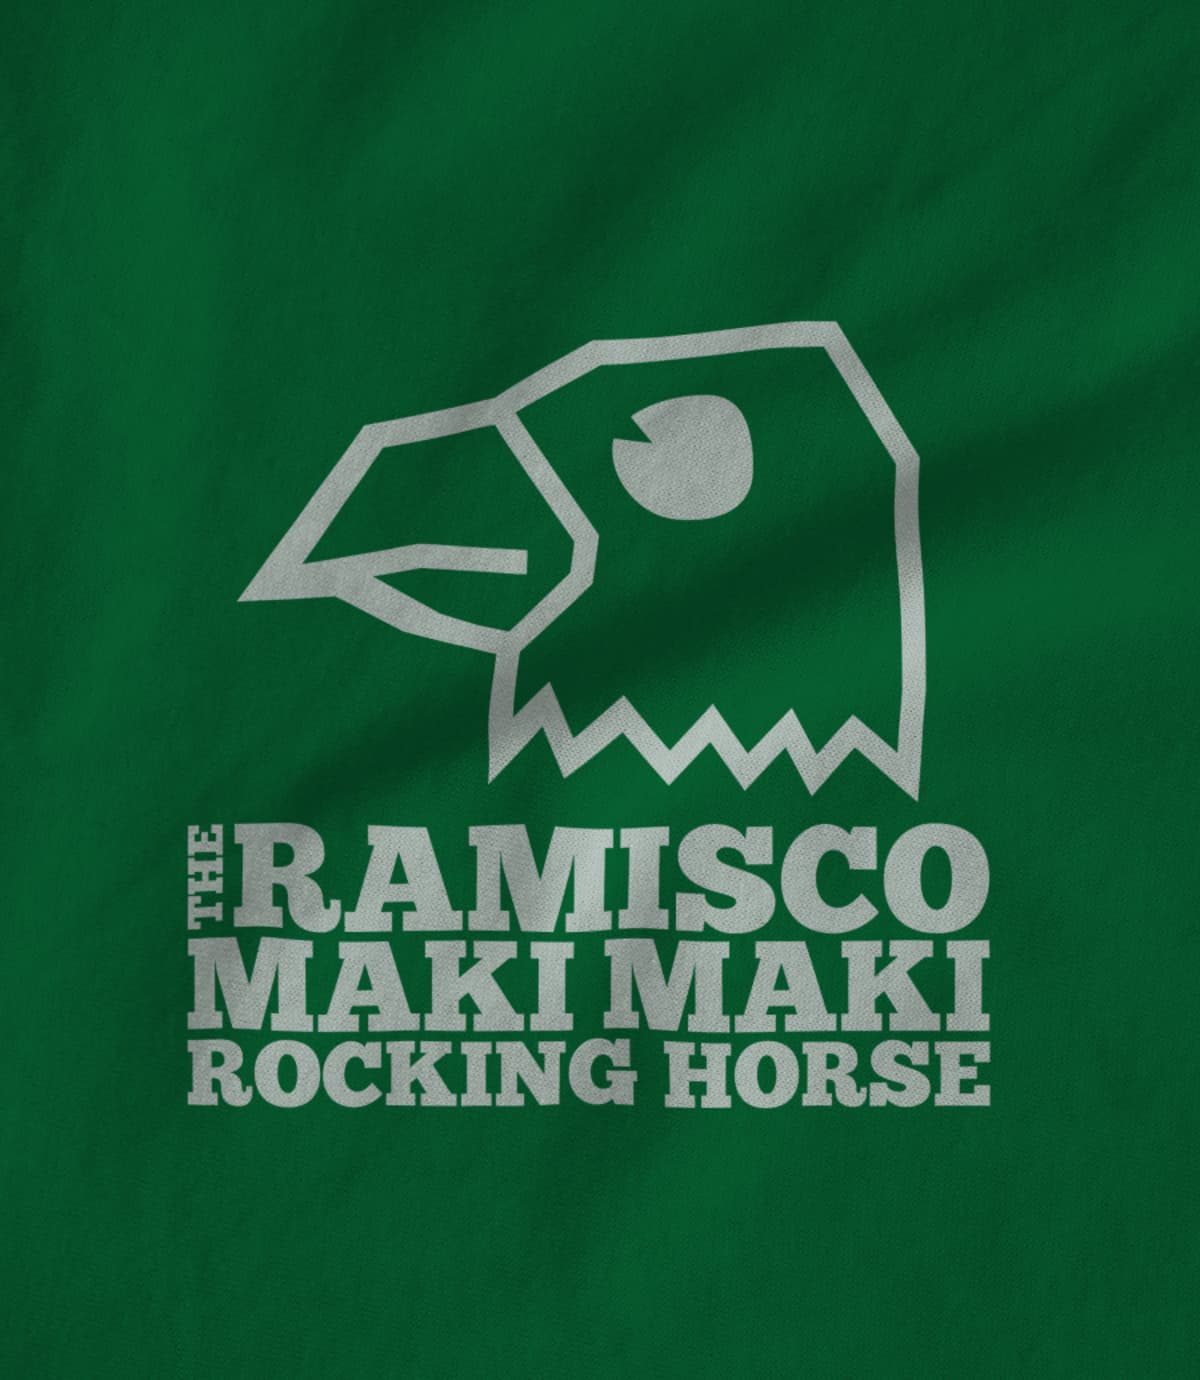 The Ramisco Maki Maki Rocking Horse